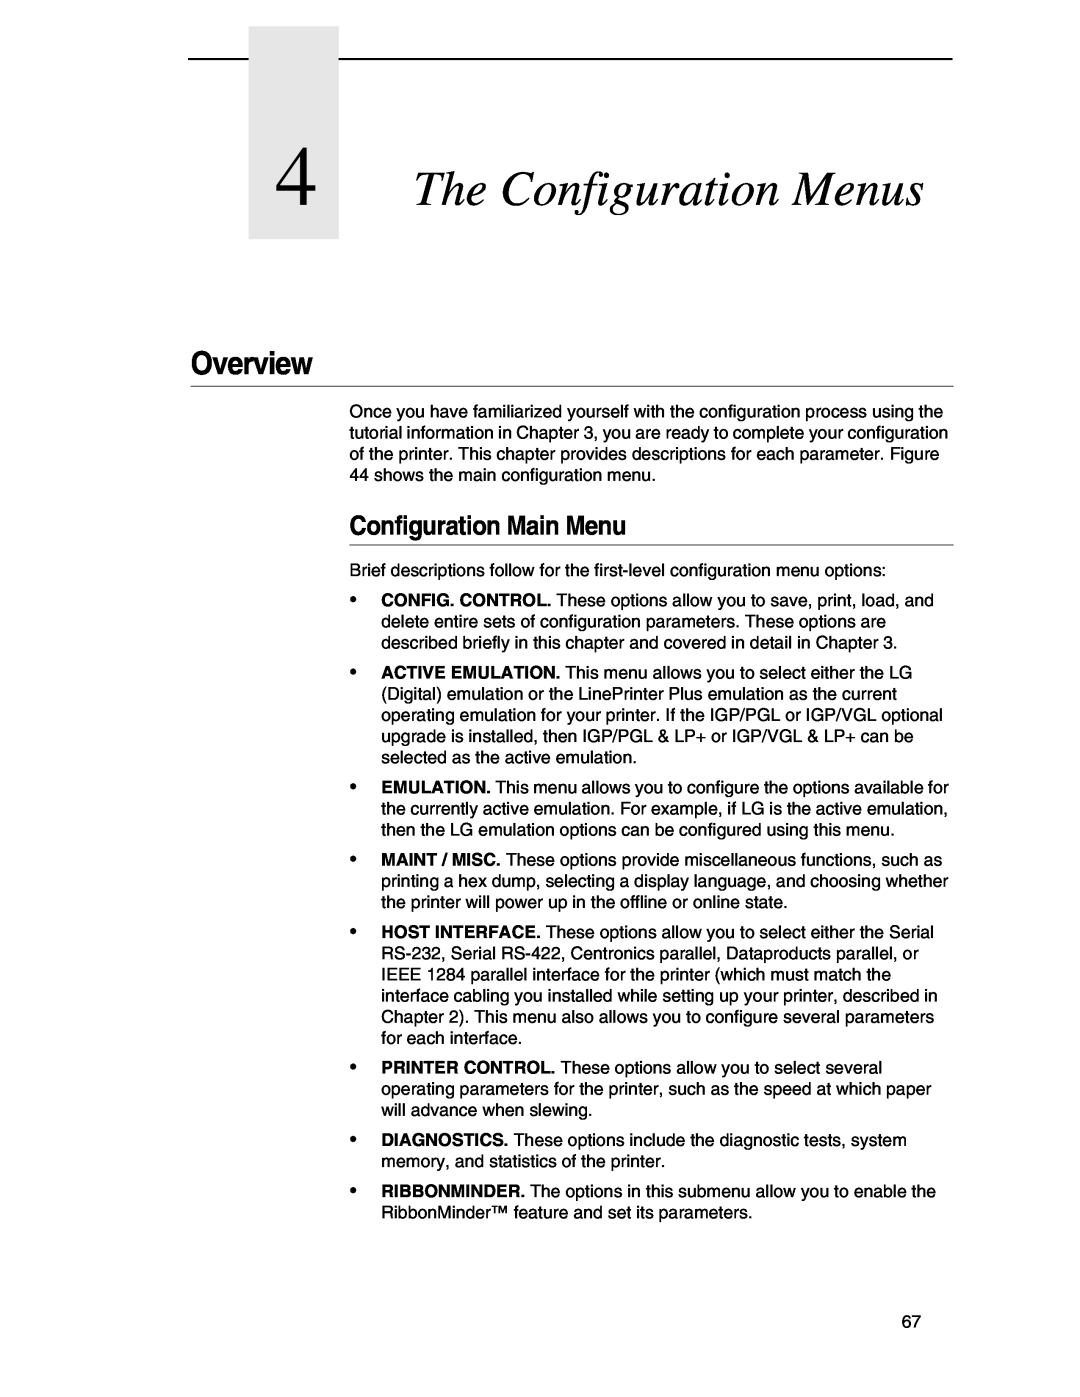 Compaq P5000 Series setup guide The Configuration Menus, Configuration Main Menu, Overview 